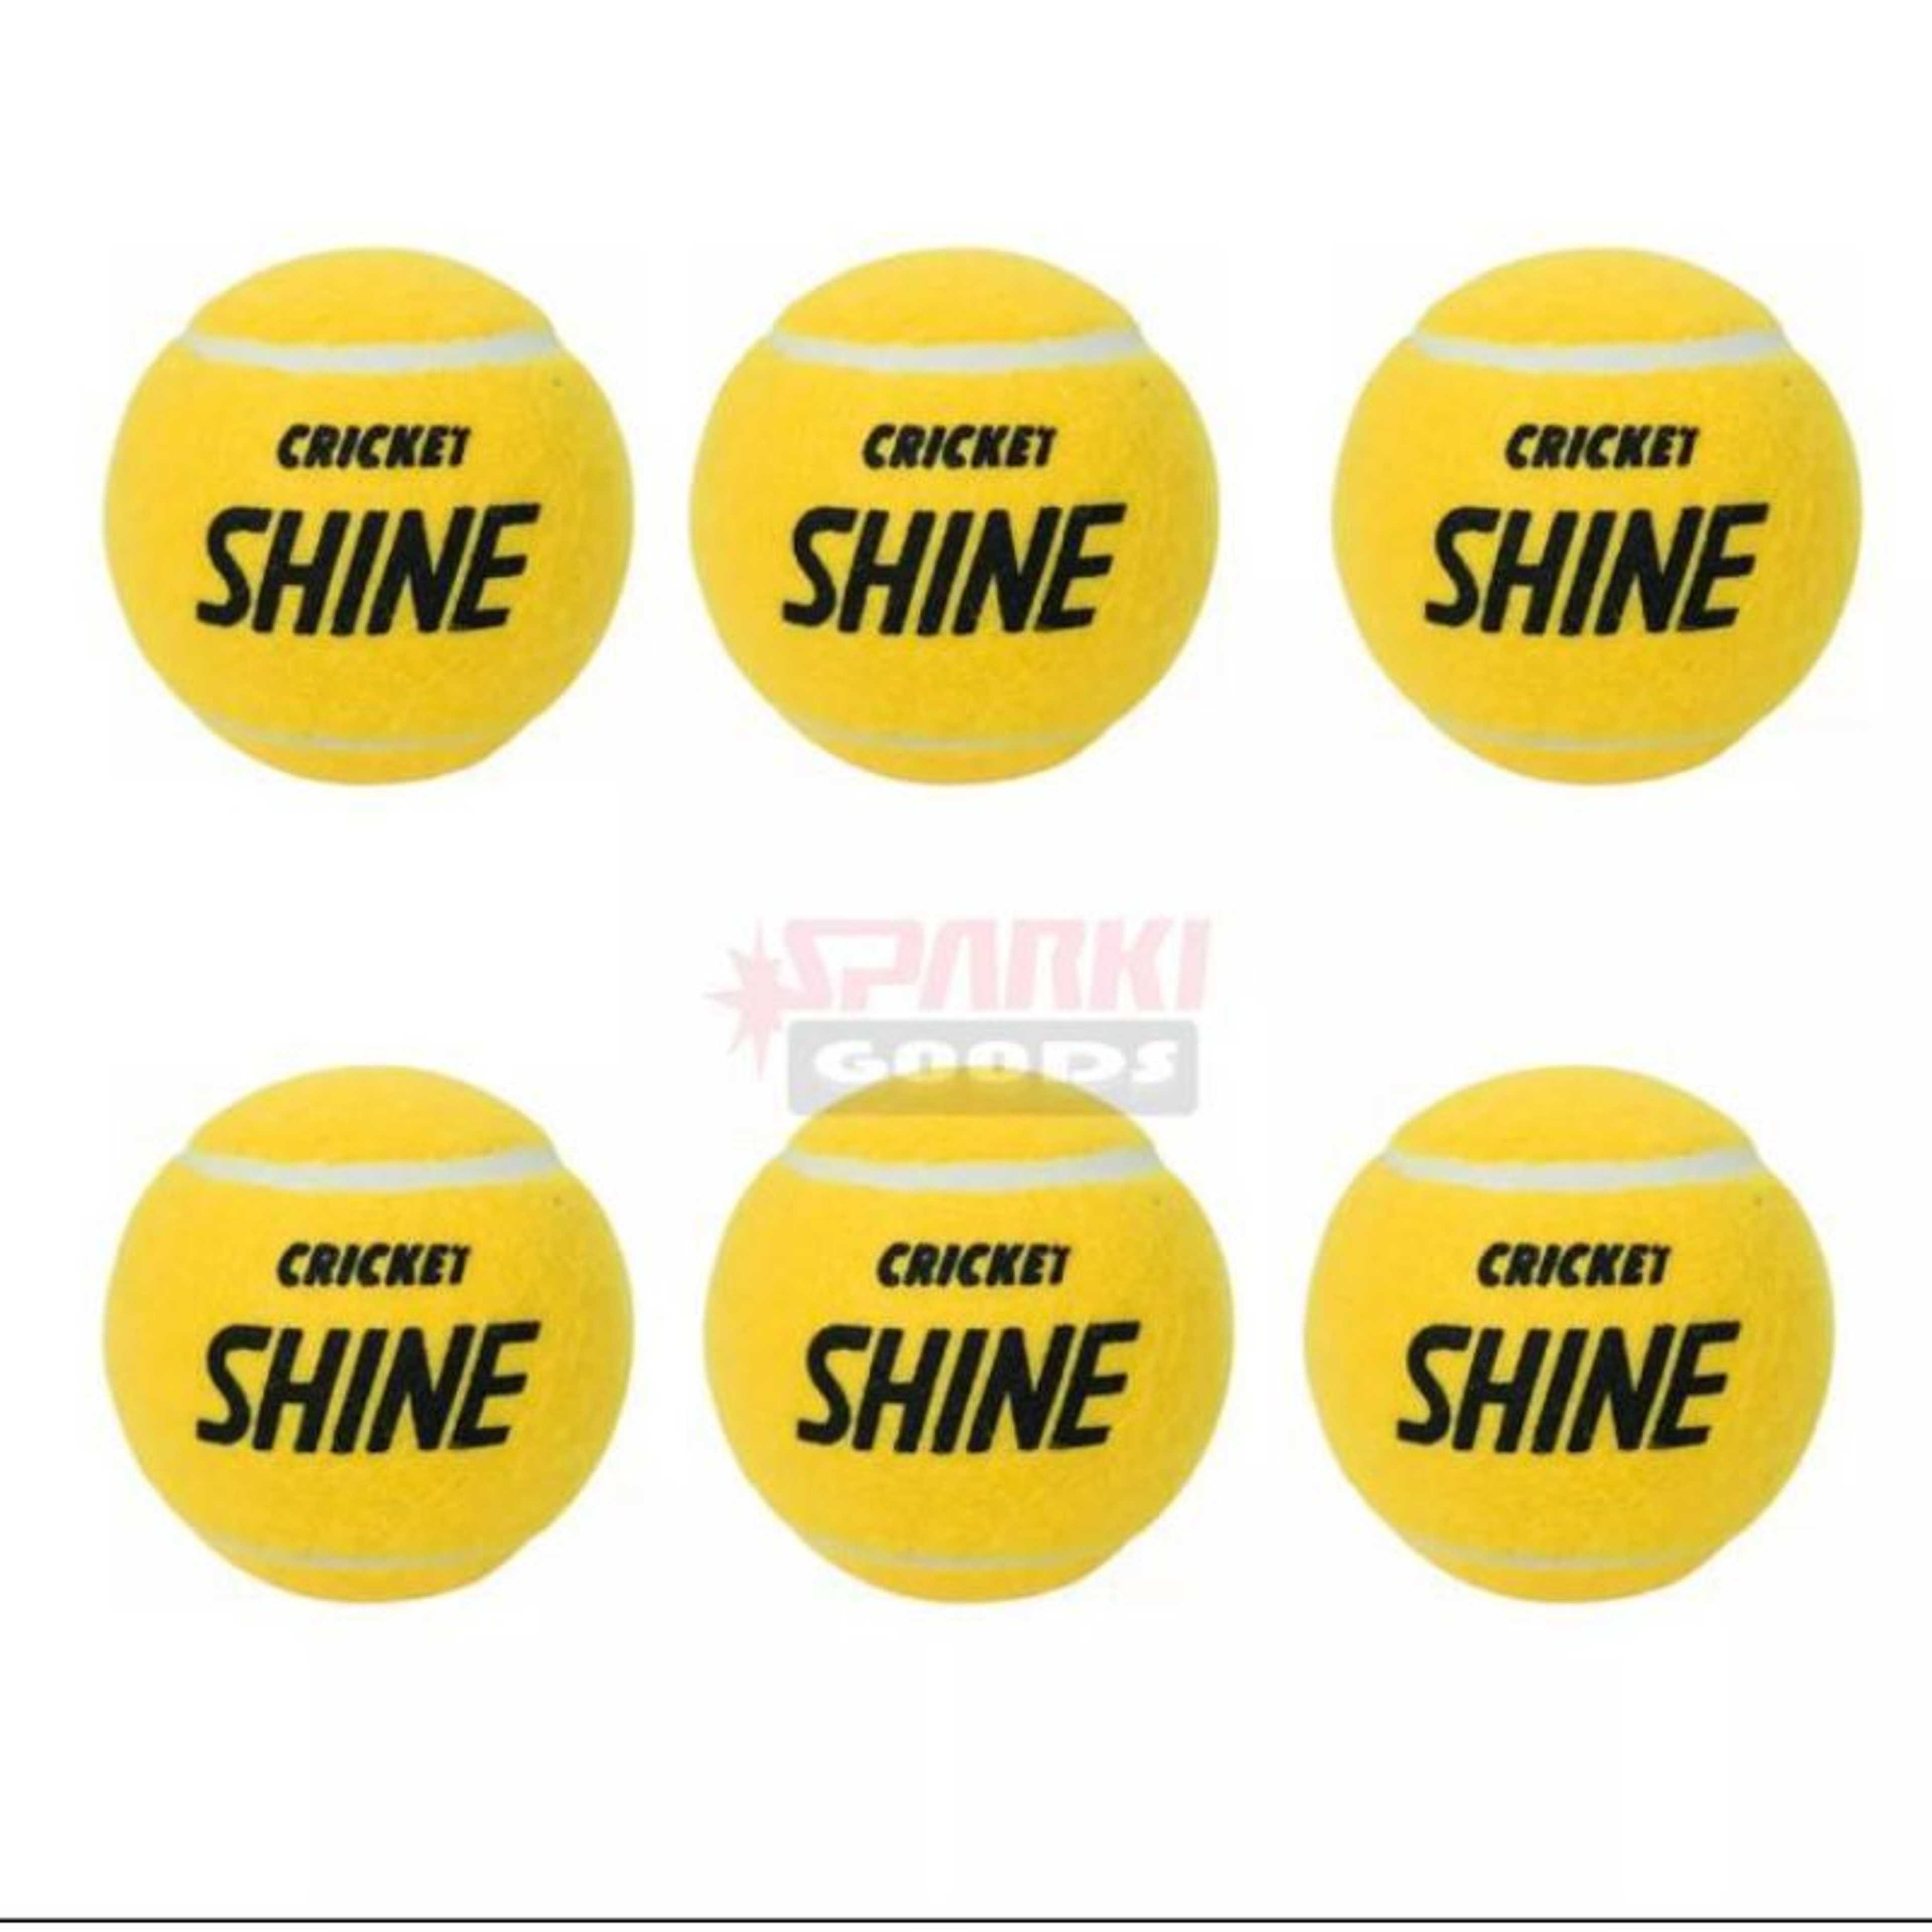 Pack Of 6 Shine Tennis Cricket Ball Tape Balls Yellow